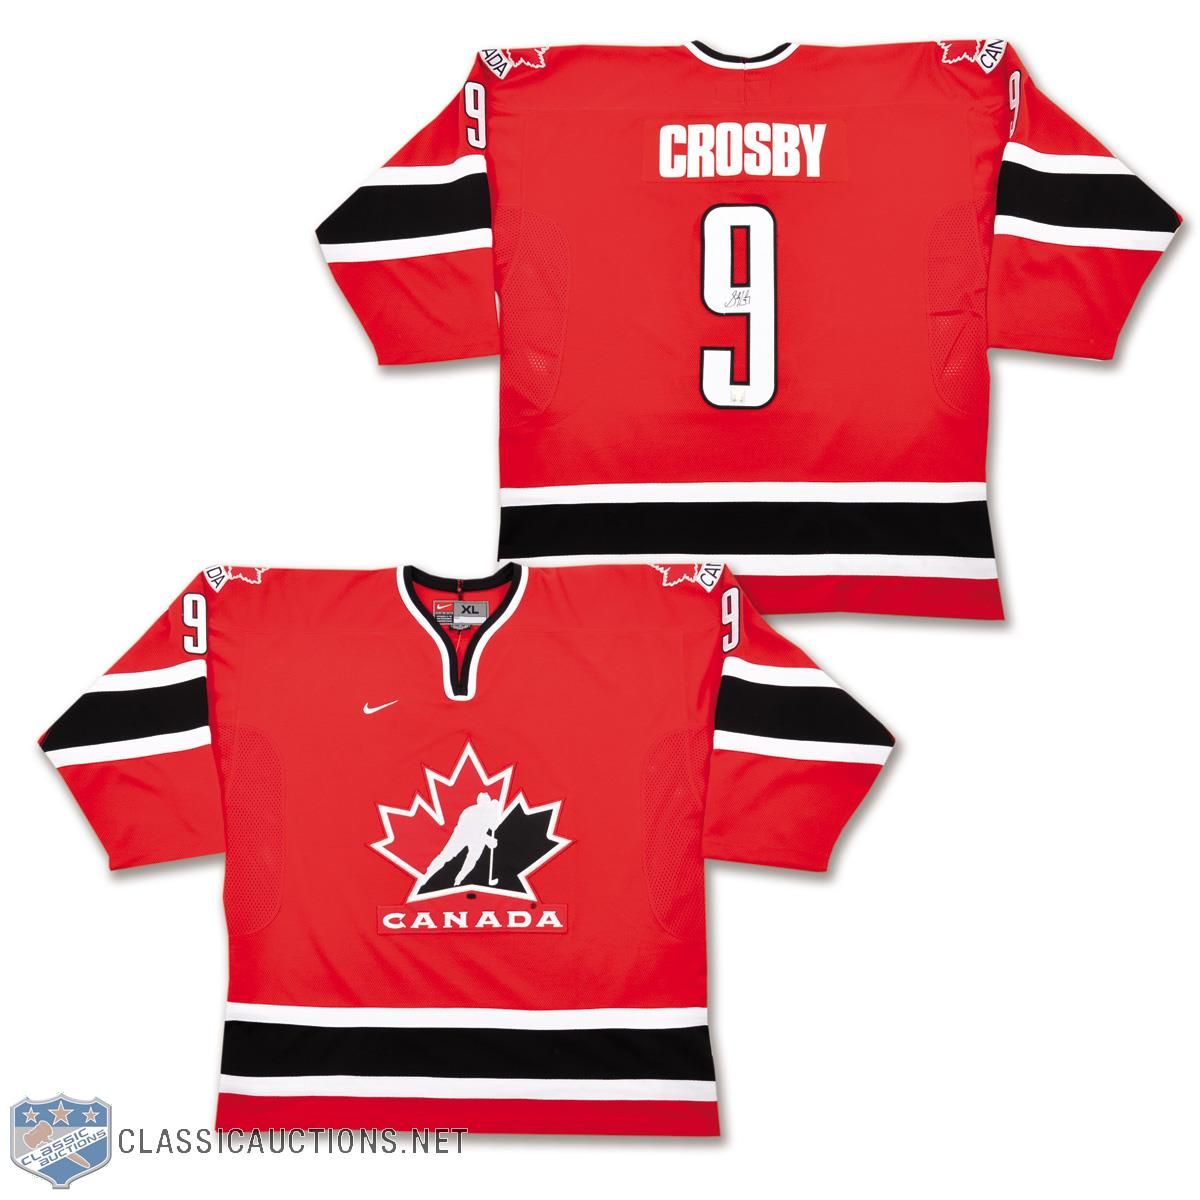 crosby signed jersey in Canada - Kijiji Canada